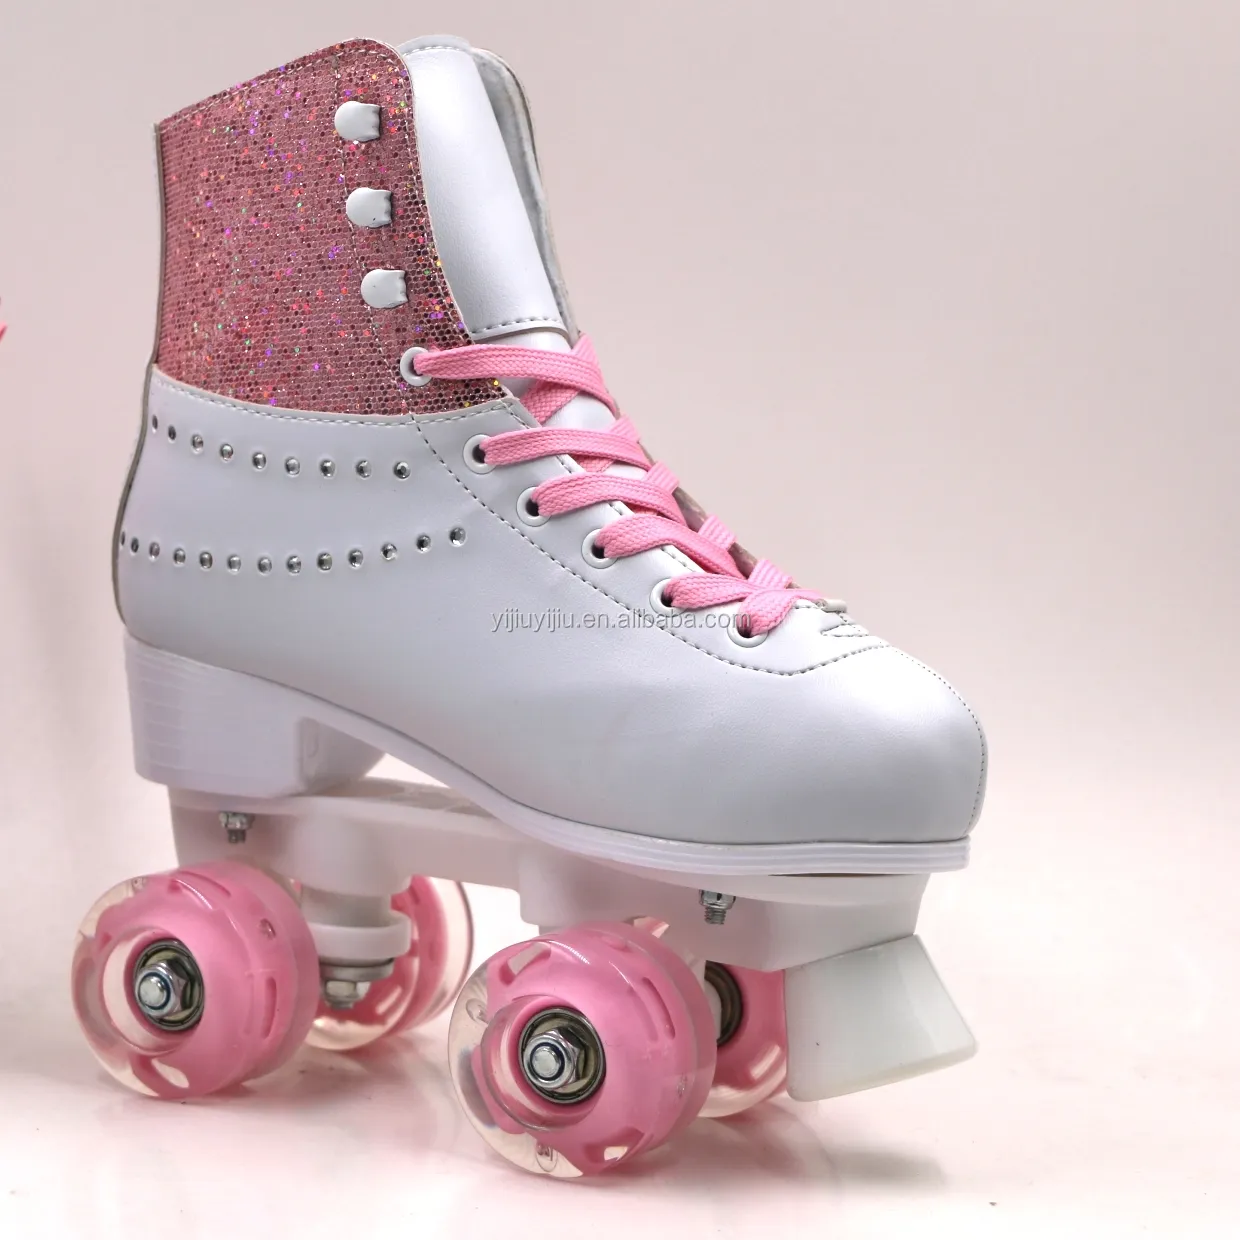 Yijiu Four 4 pattini a rotelle regolabili professionali Strap On Skate aliante per scarpe da Skate per adulti